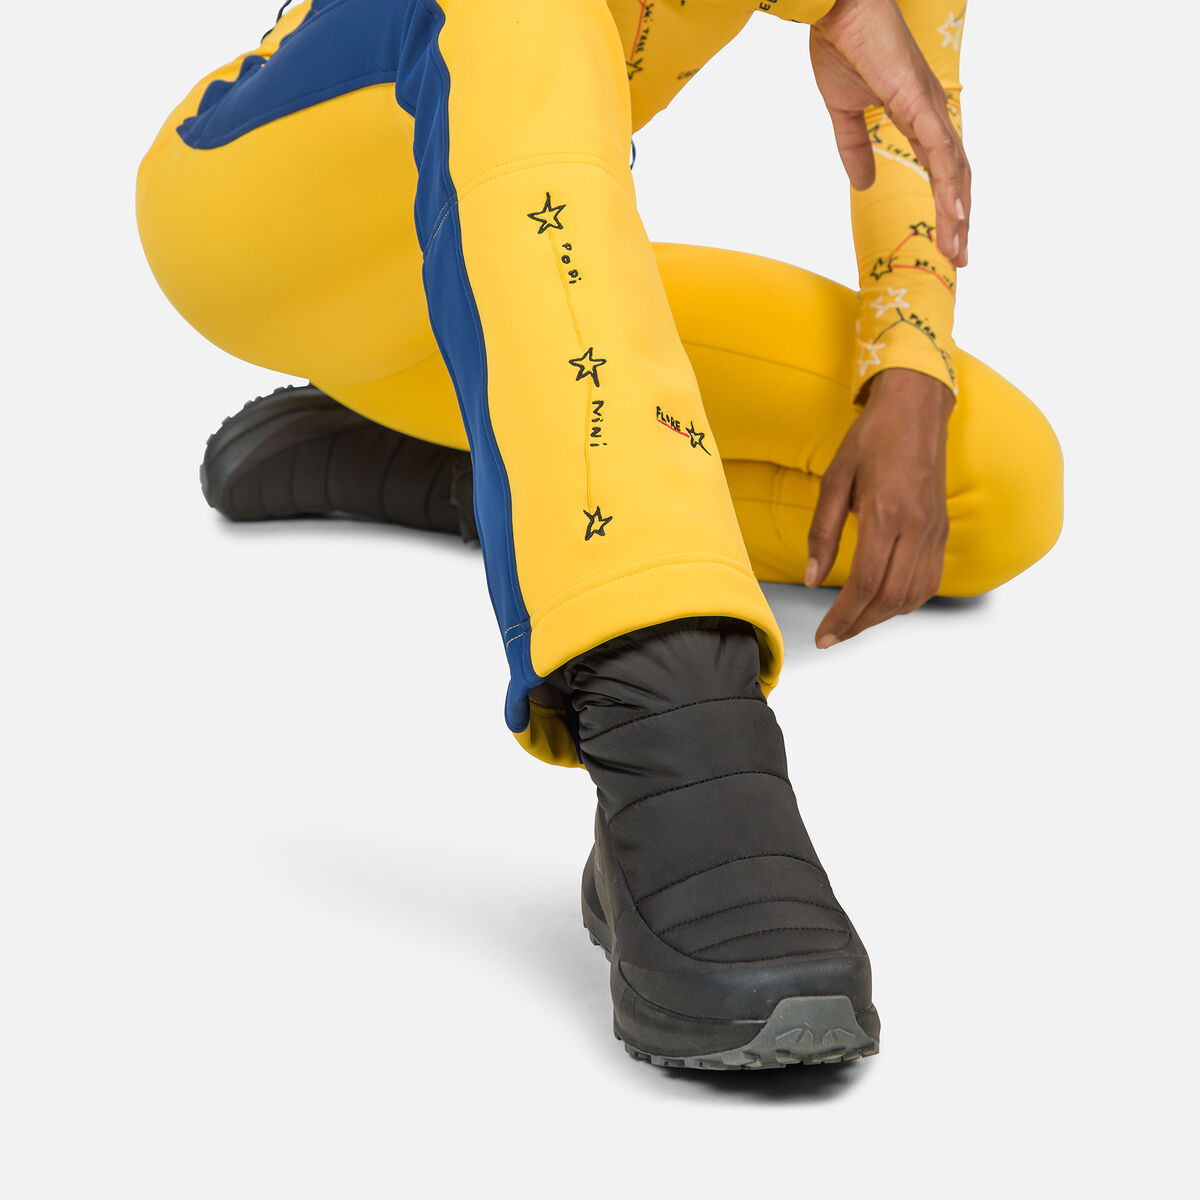 Rossignol Women's JCC Sirius Softshell Pants yellow